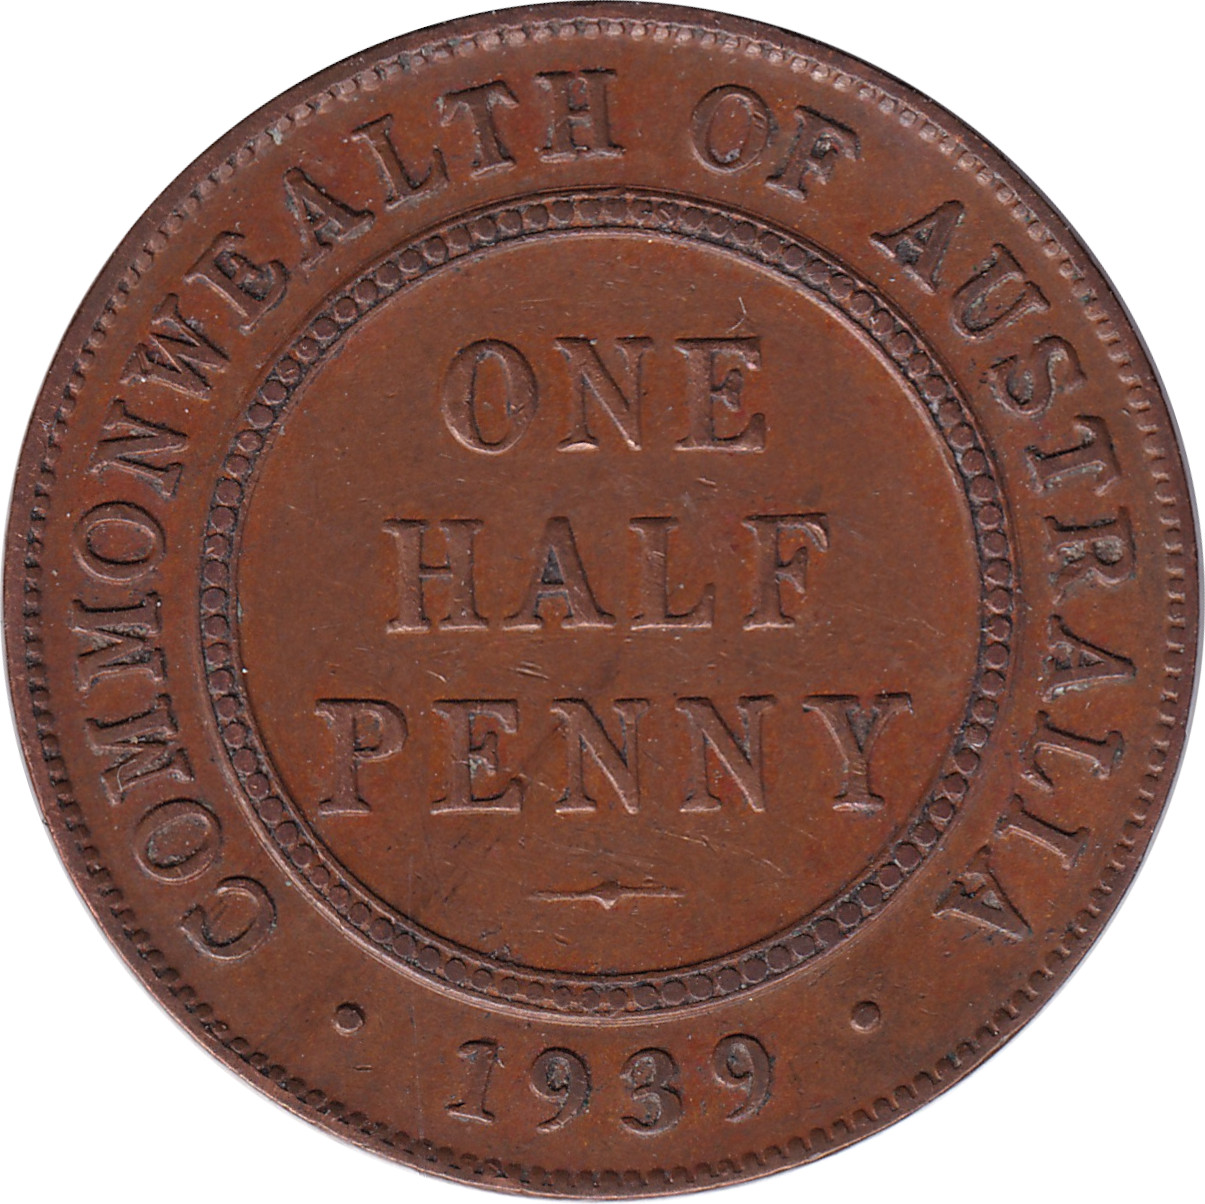 1/2 penny - George VI - Premier revers